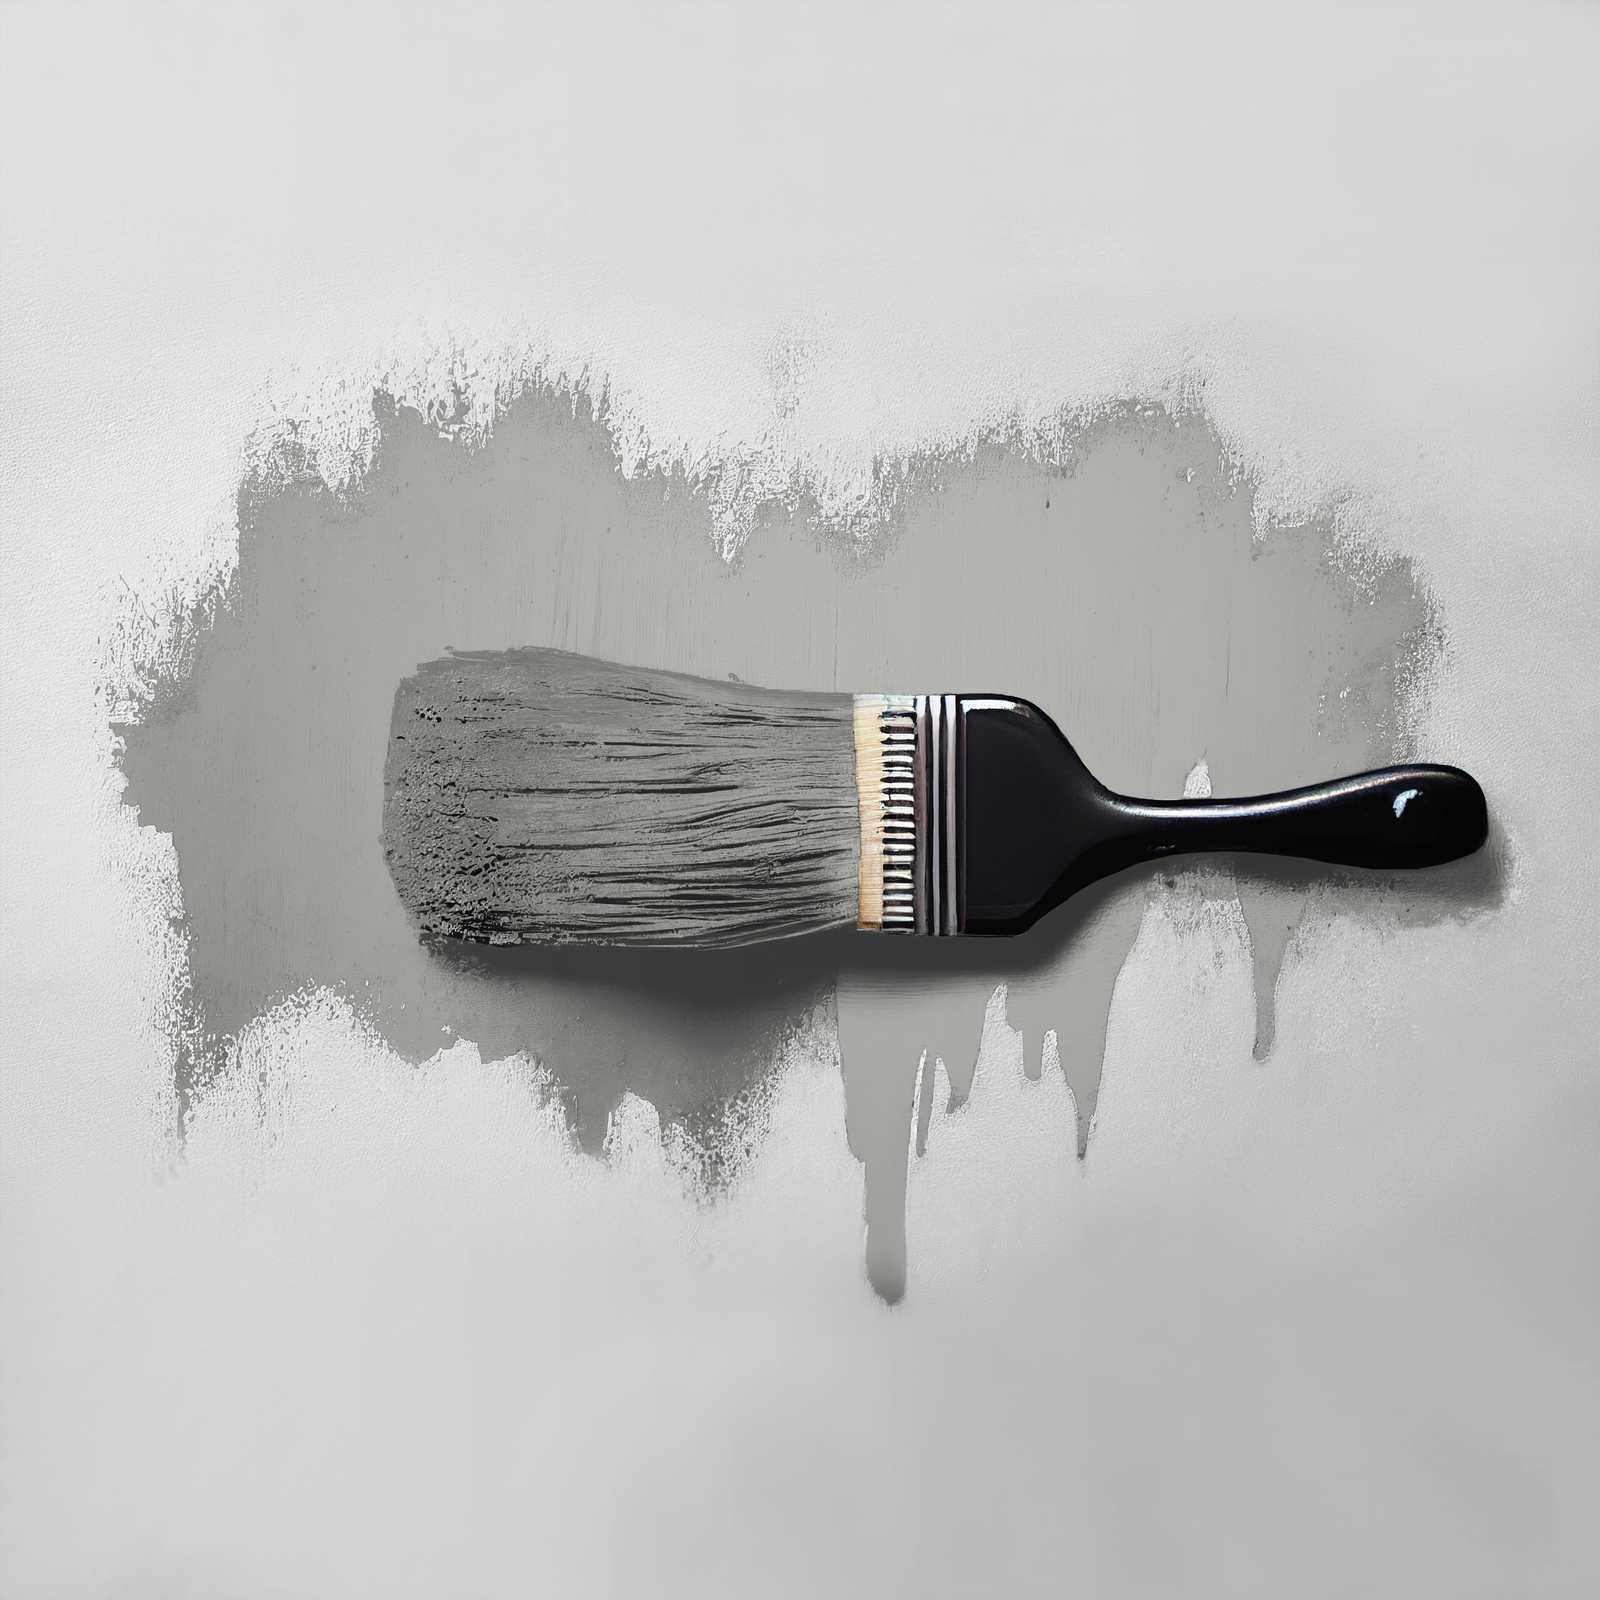             Wall Paint TCK1010 »Grey Salt« in neutral grey – 5.0 litre
        